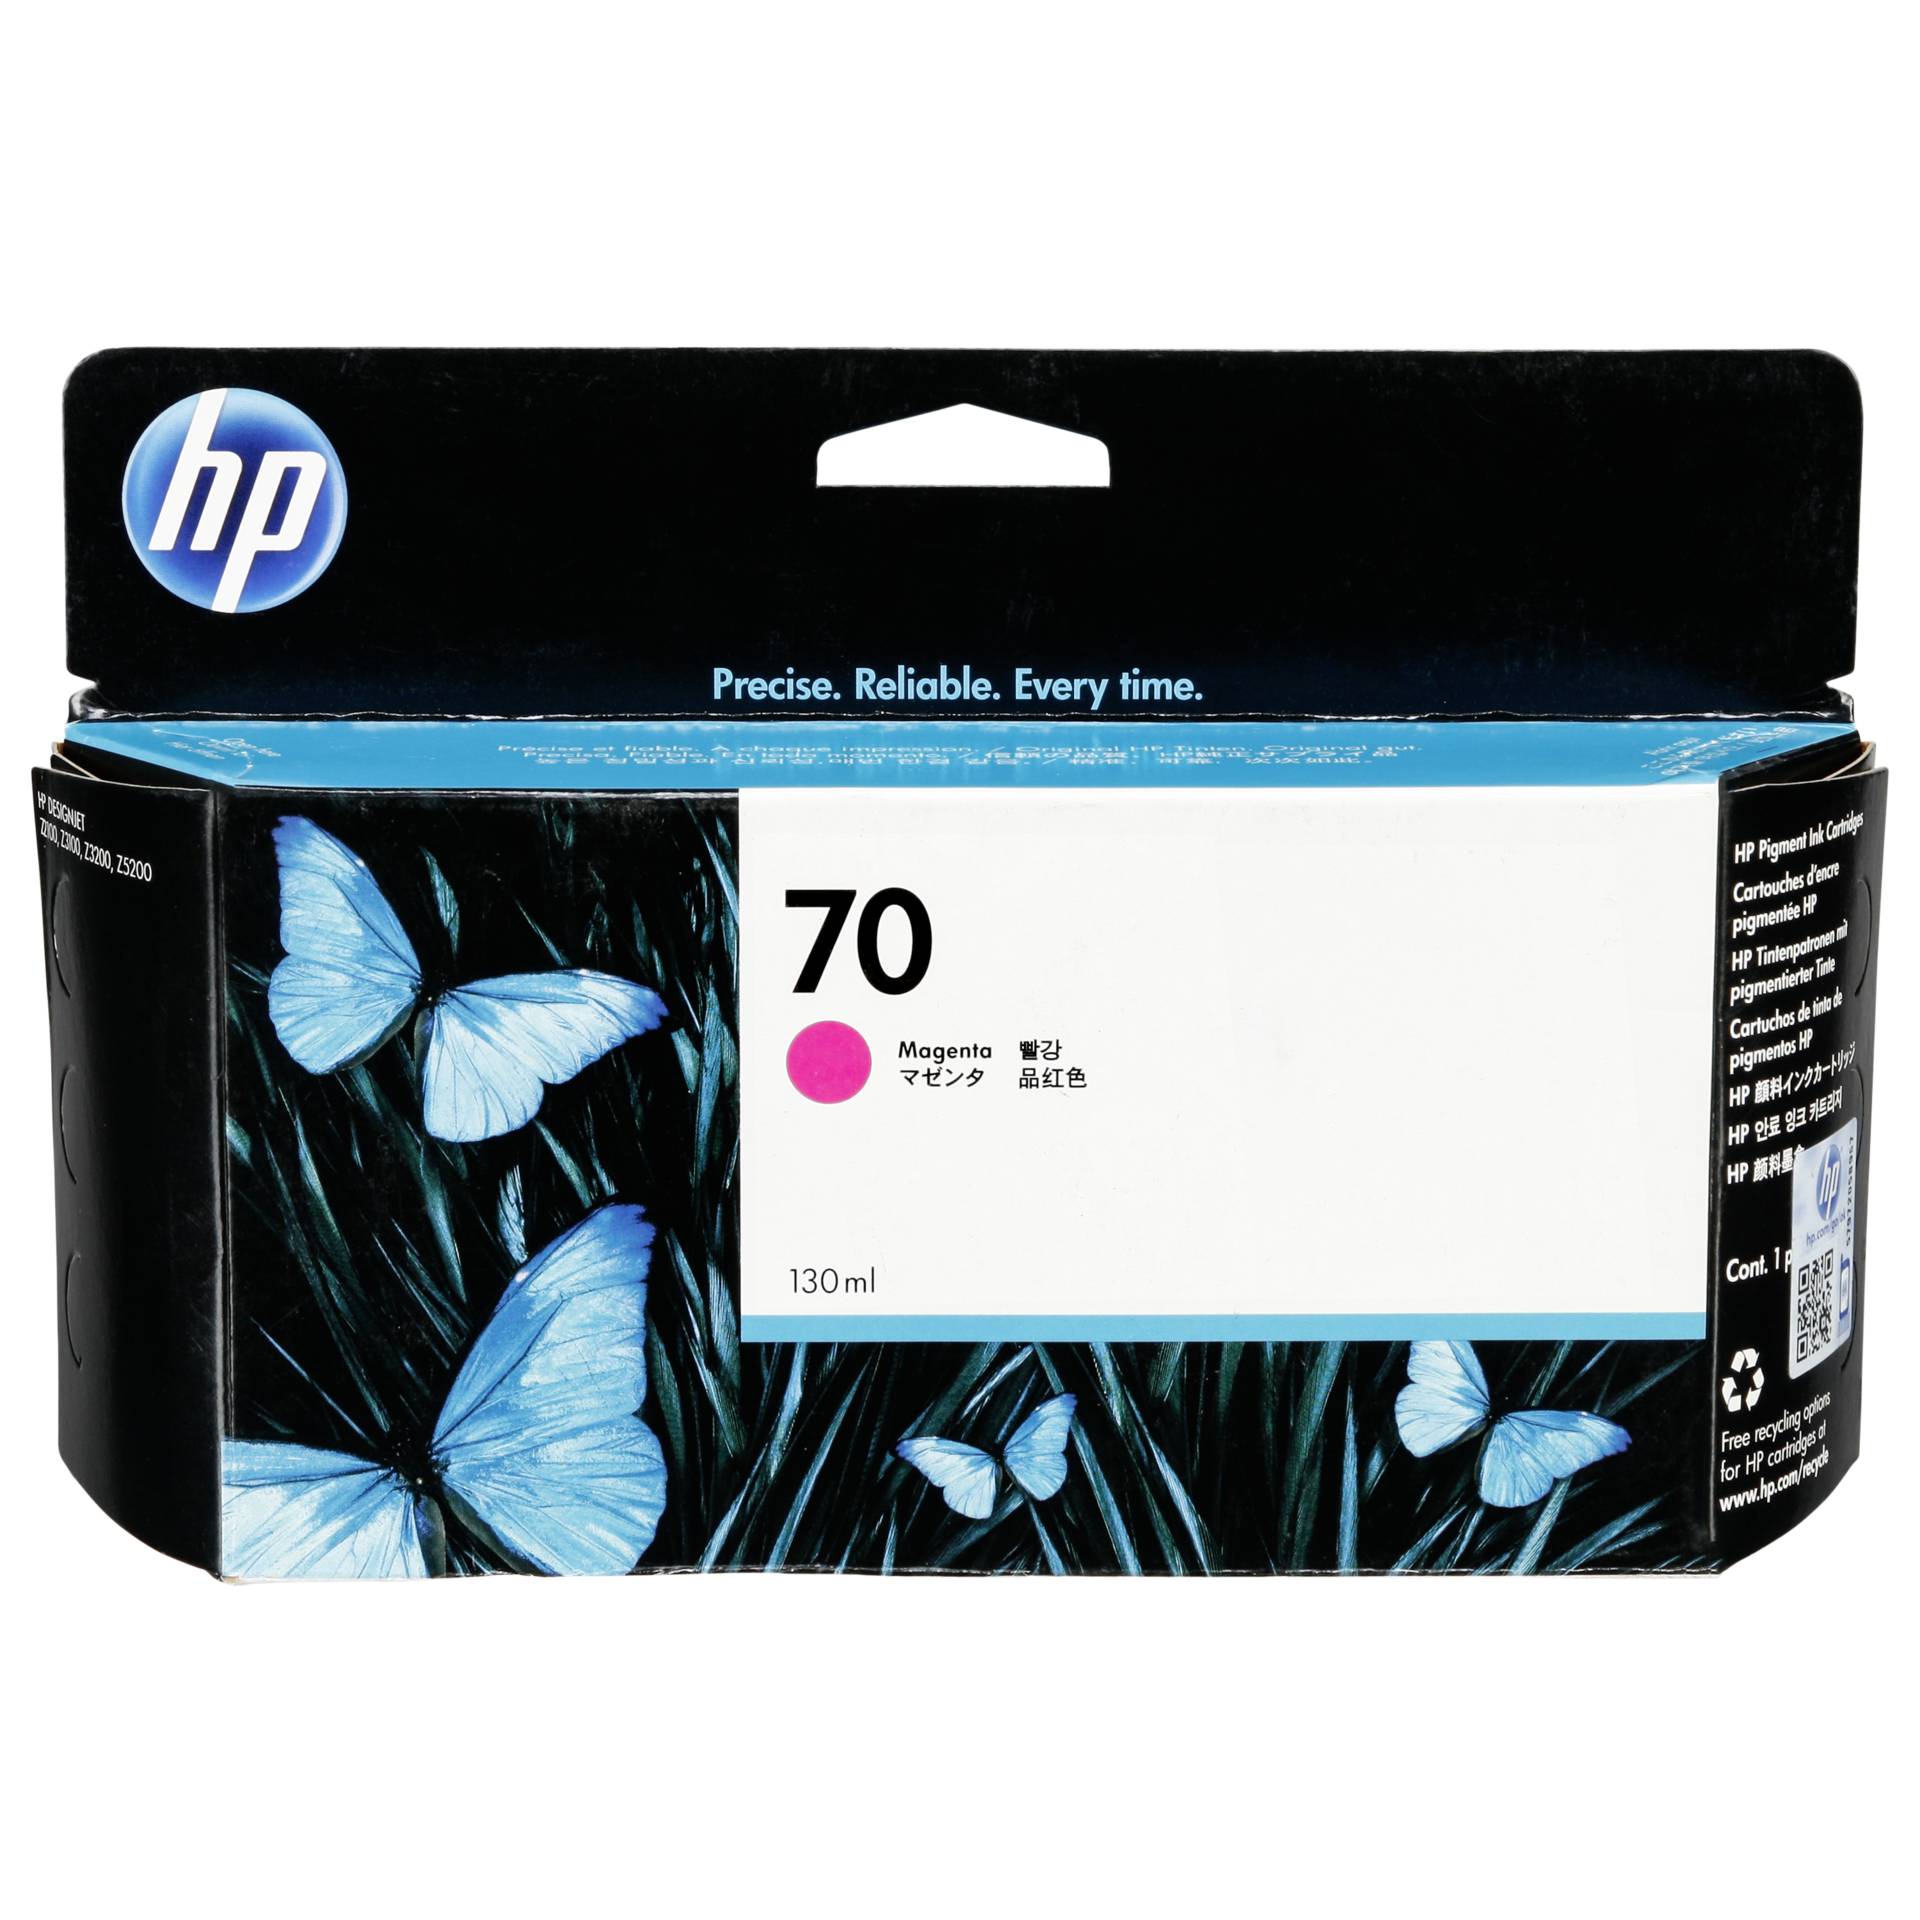 HP Tinte 70 magenta Original Kapazität: 130ml